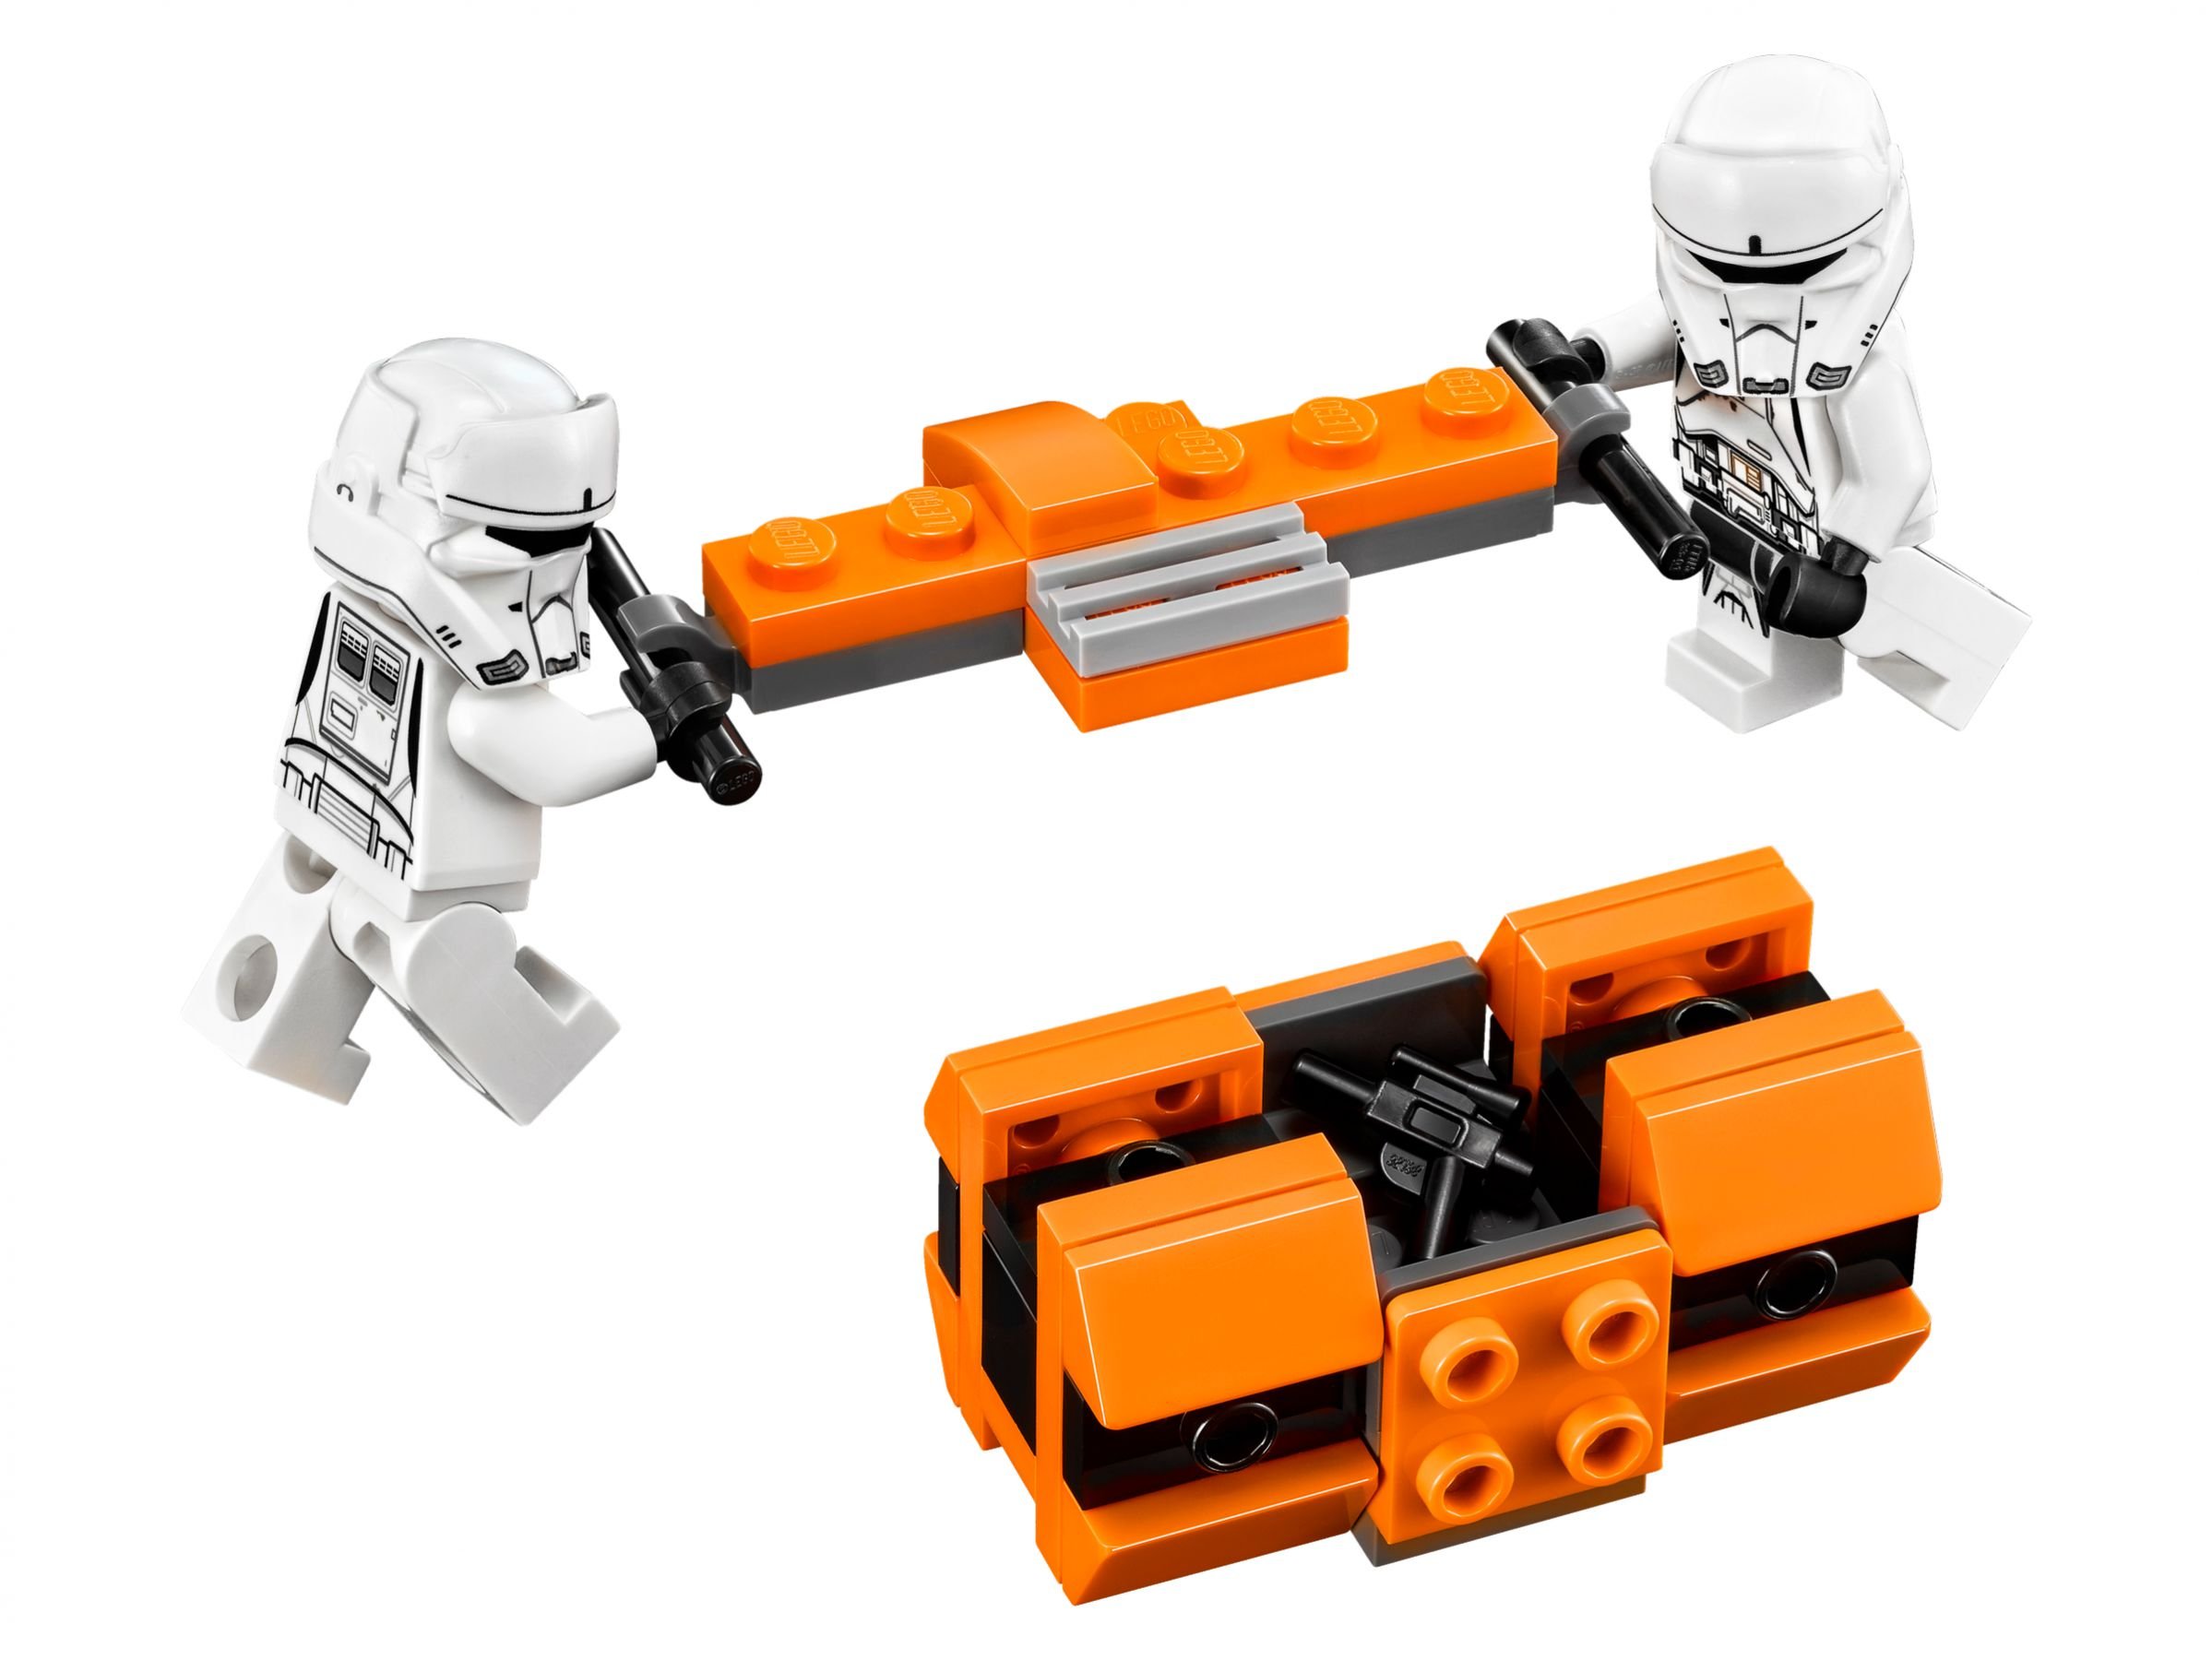 LEGO Star Wars 75152 Imperial Assault Hovertank™ LEGO_75152_alt7.jpg